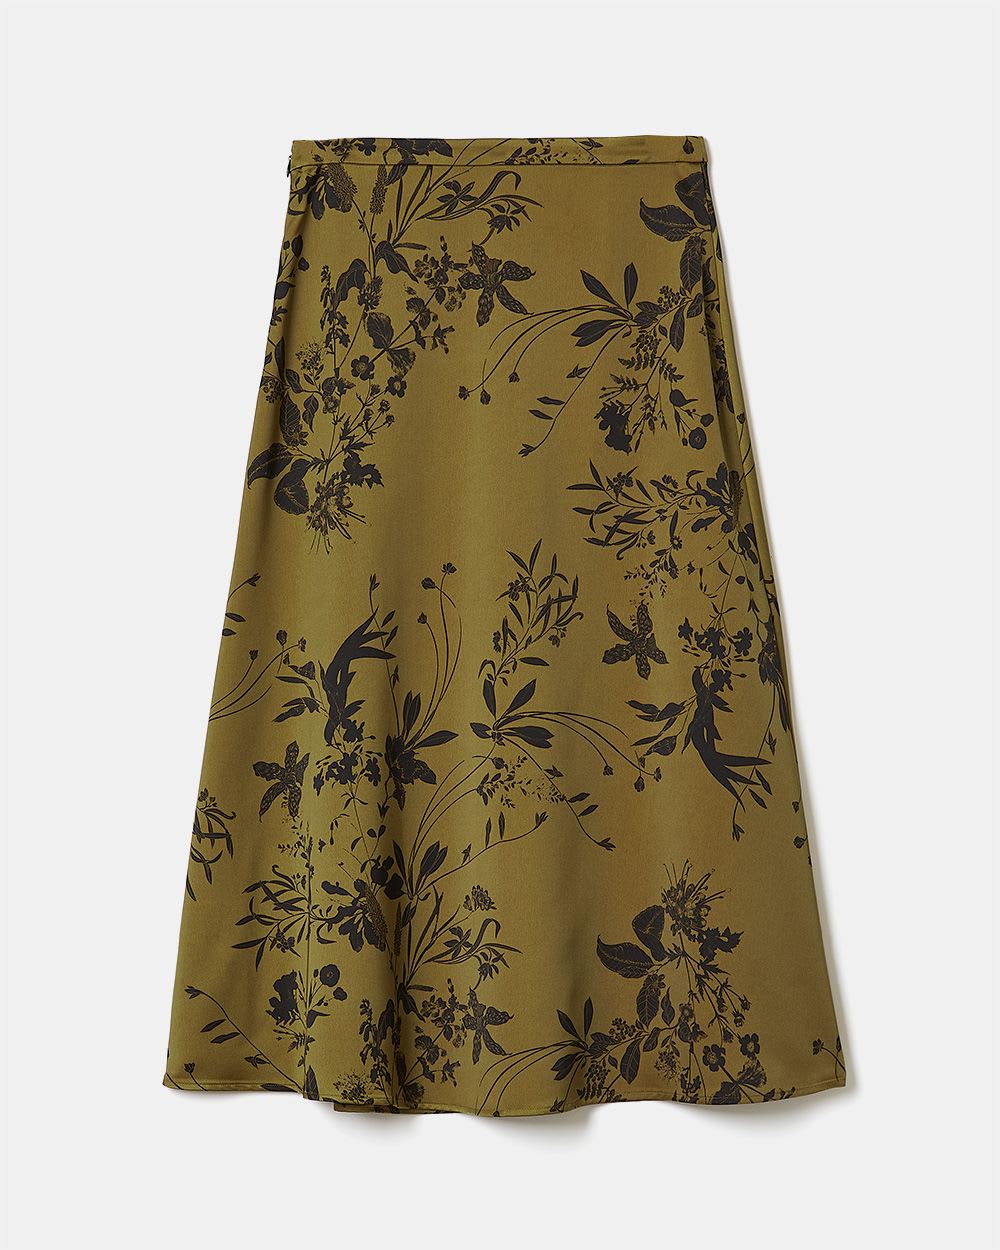 Printed Satin High-Waist A-Line Midi Skirt